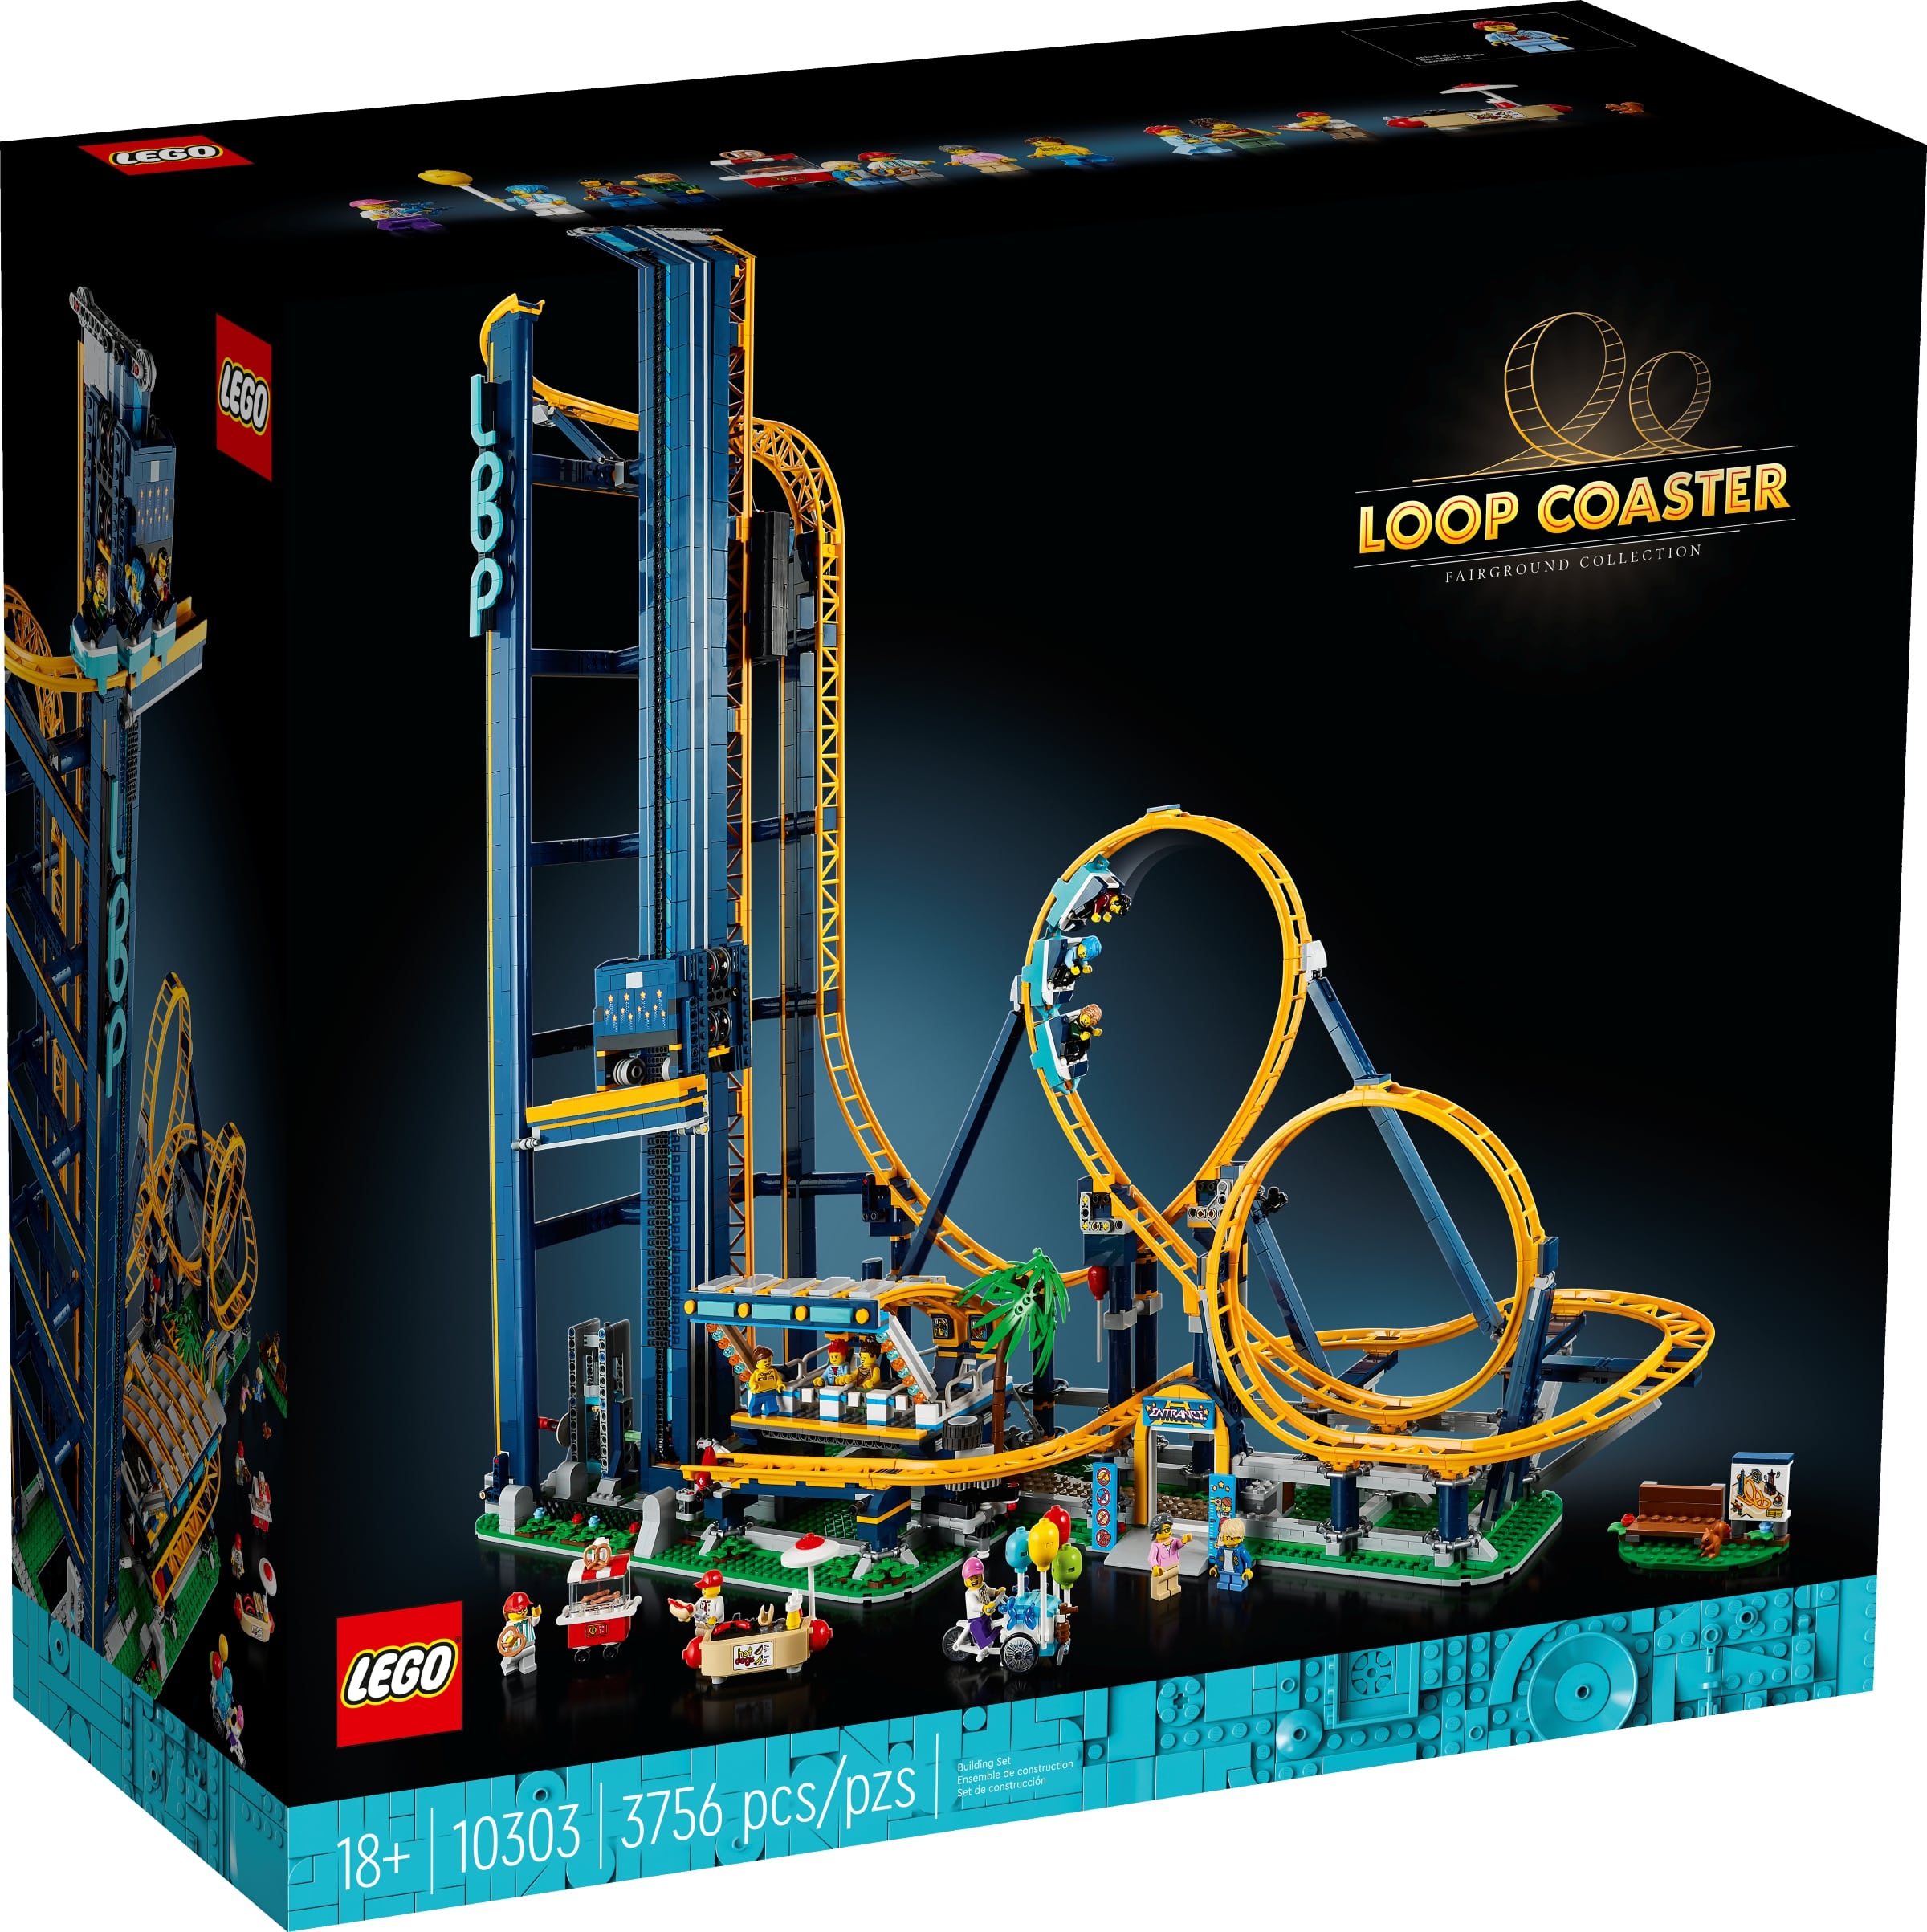 LEGO Icons Fairground Collection Loop Coaster Set 10303 - US